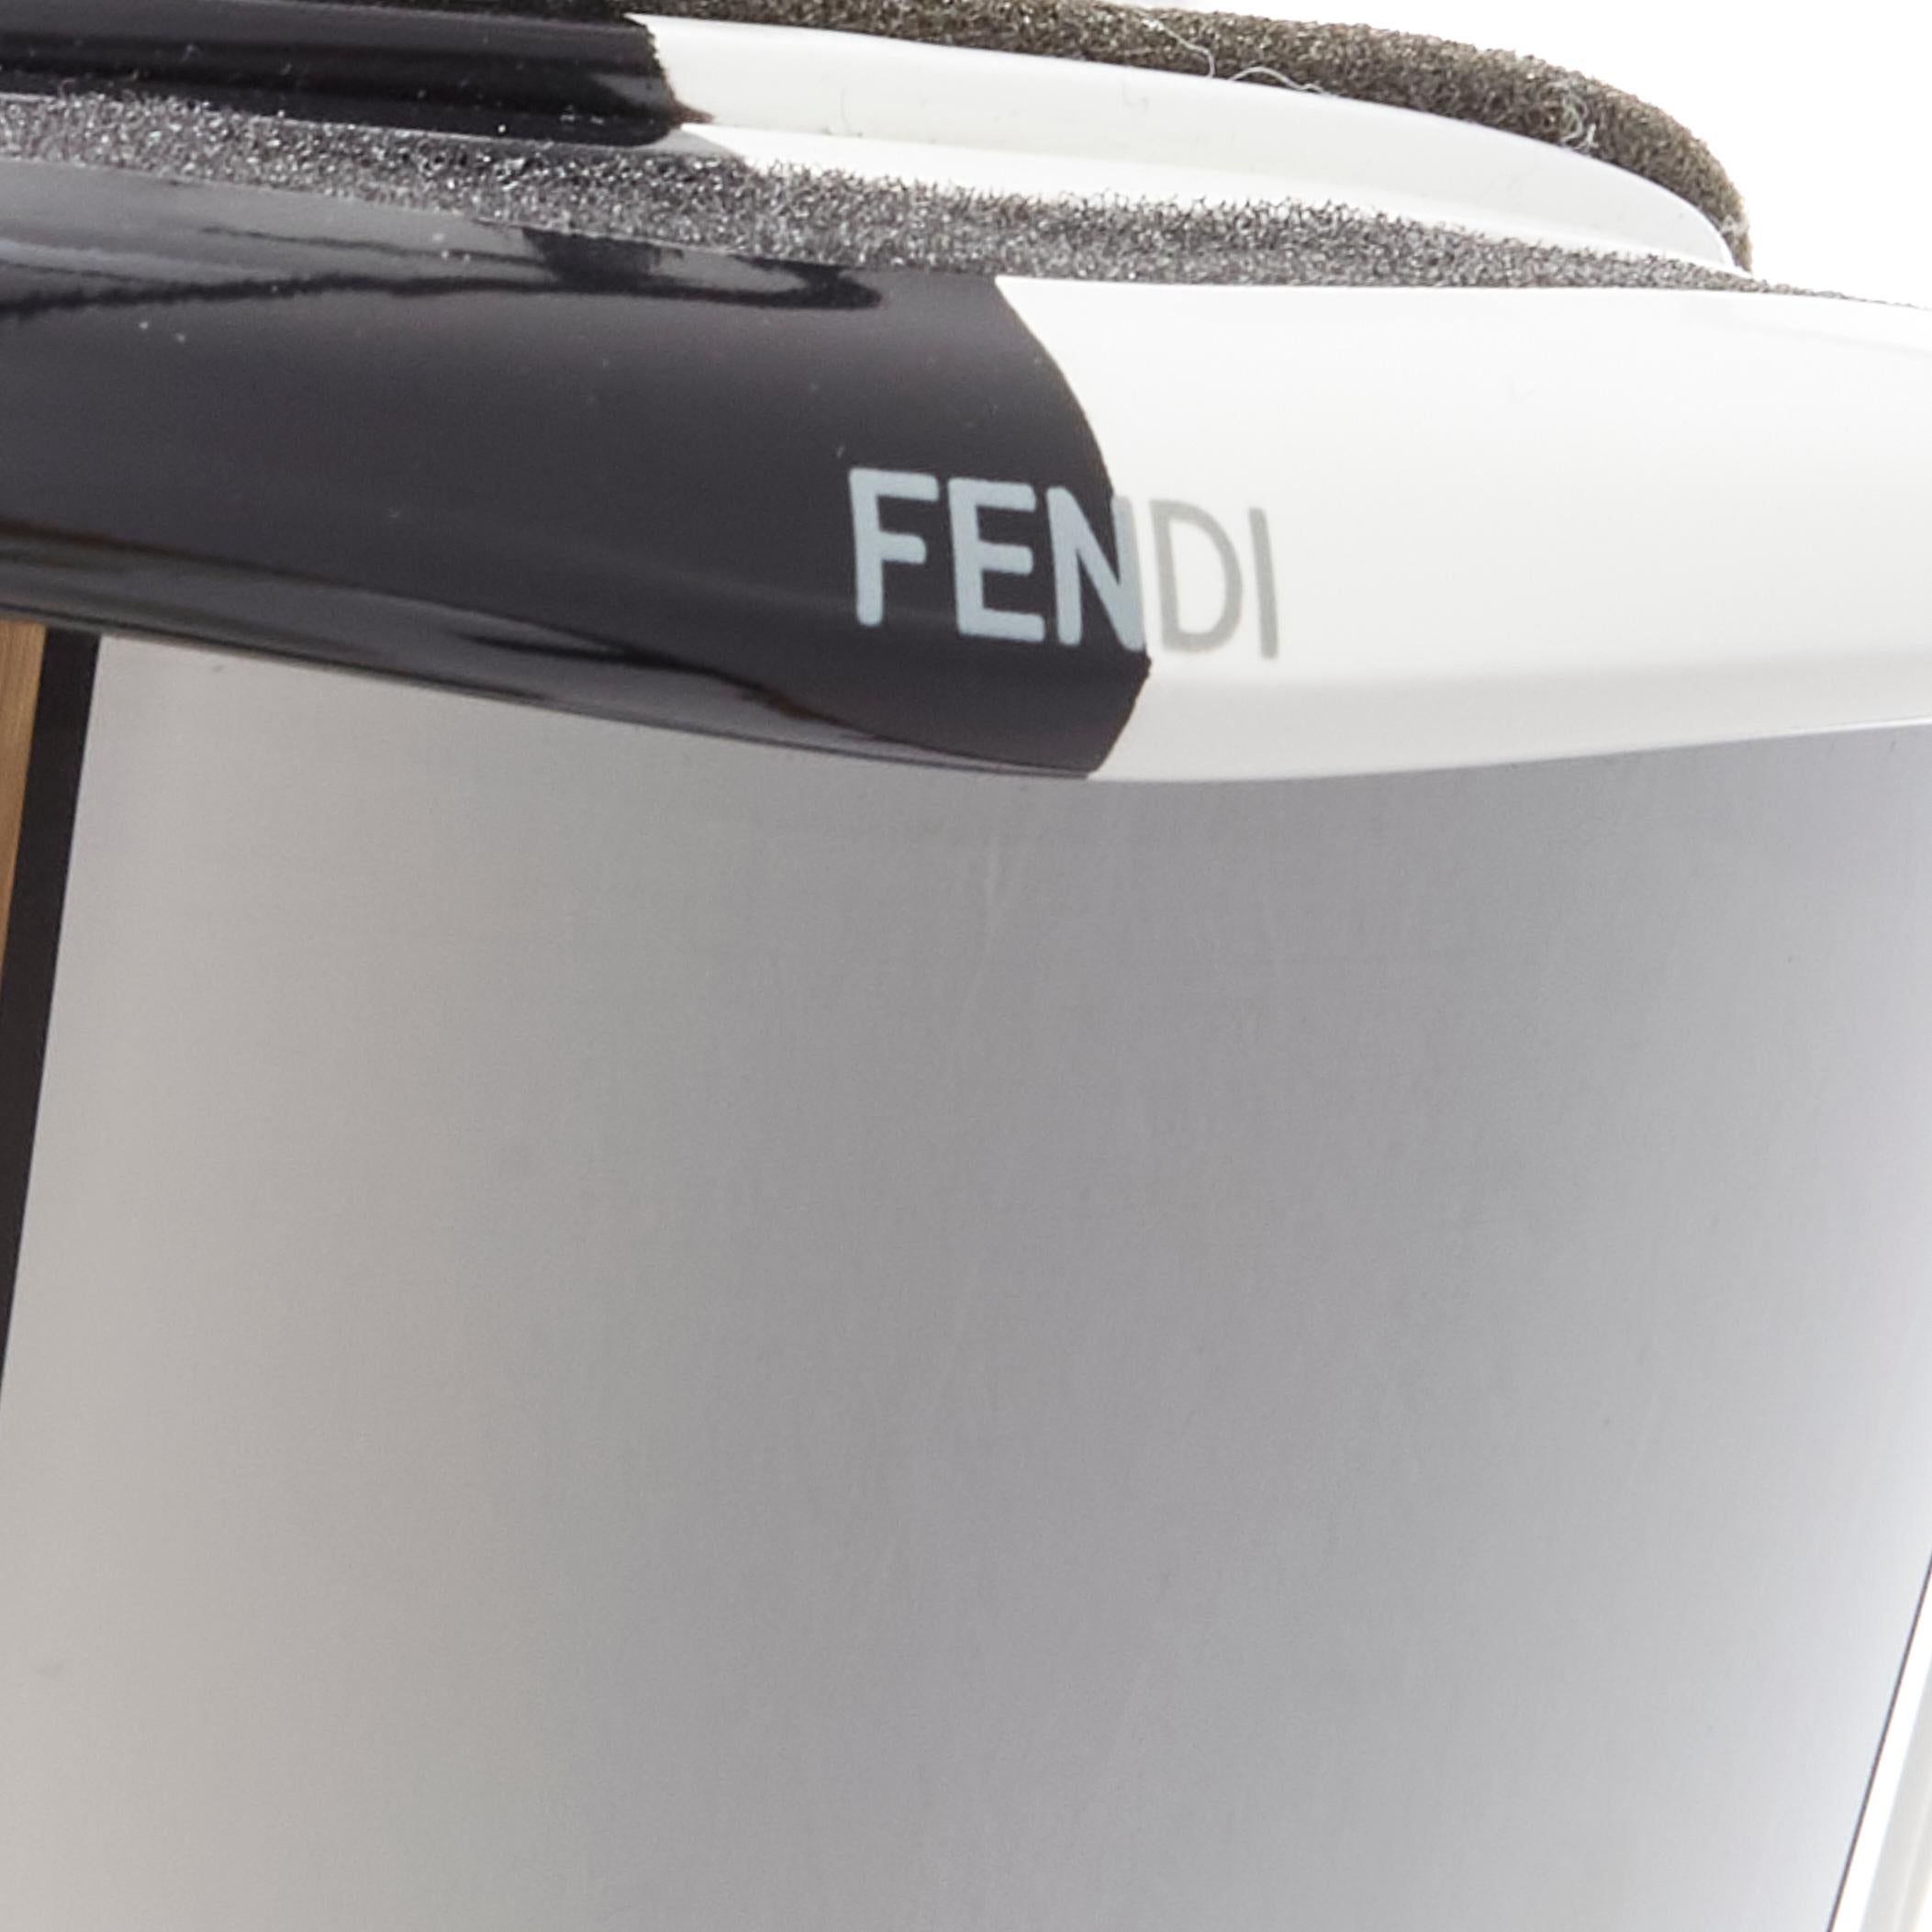 FENDI Split black white bicolor mirrored lens ski goggles Unisex
Brand: Fendi
Material: Plastic
Color: Black
Pattern: Solid
Closure: Elasticated
Made in: Italy

CONDITION:
Condition: Excellent, this item was pre-owned and is in excellent condition.